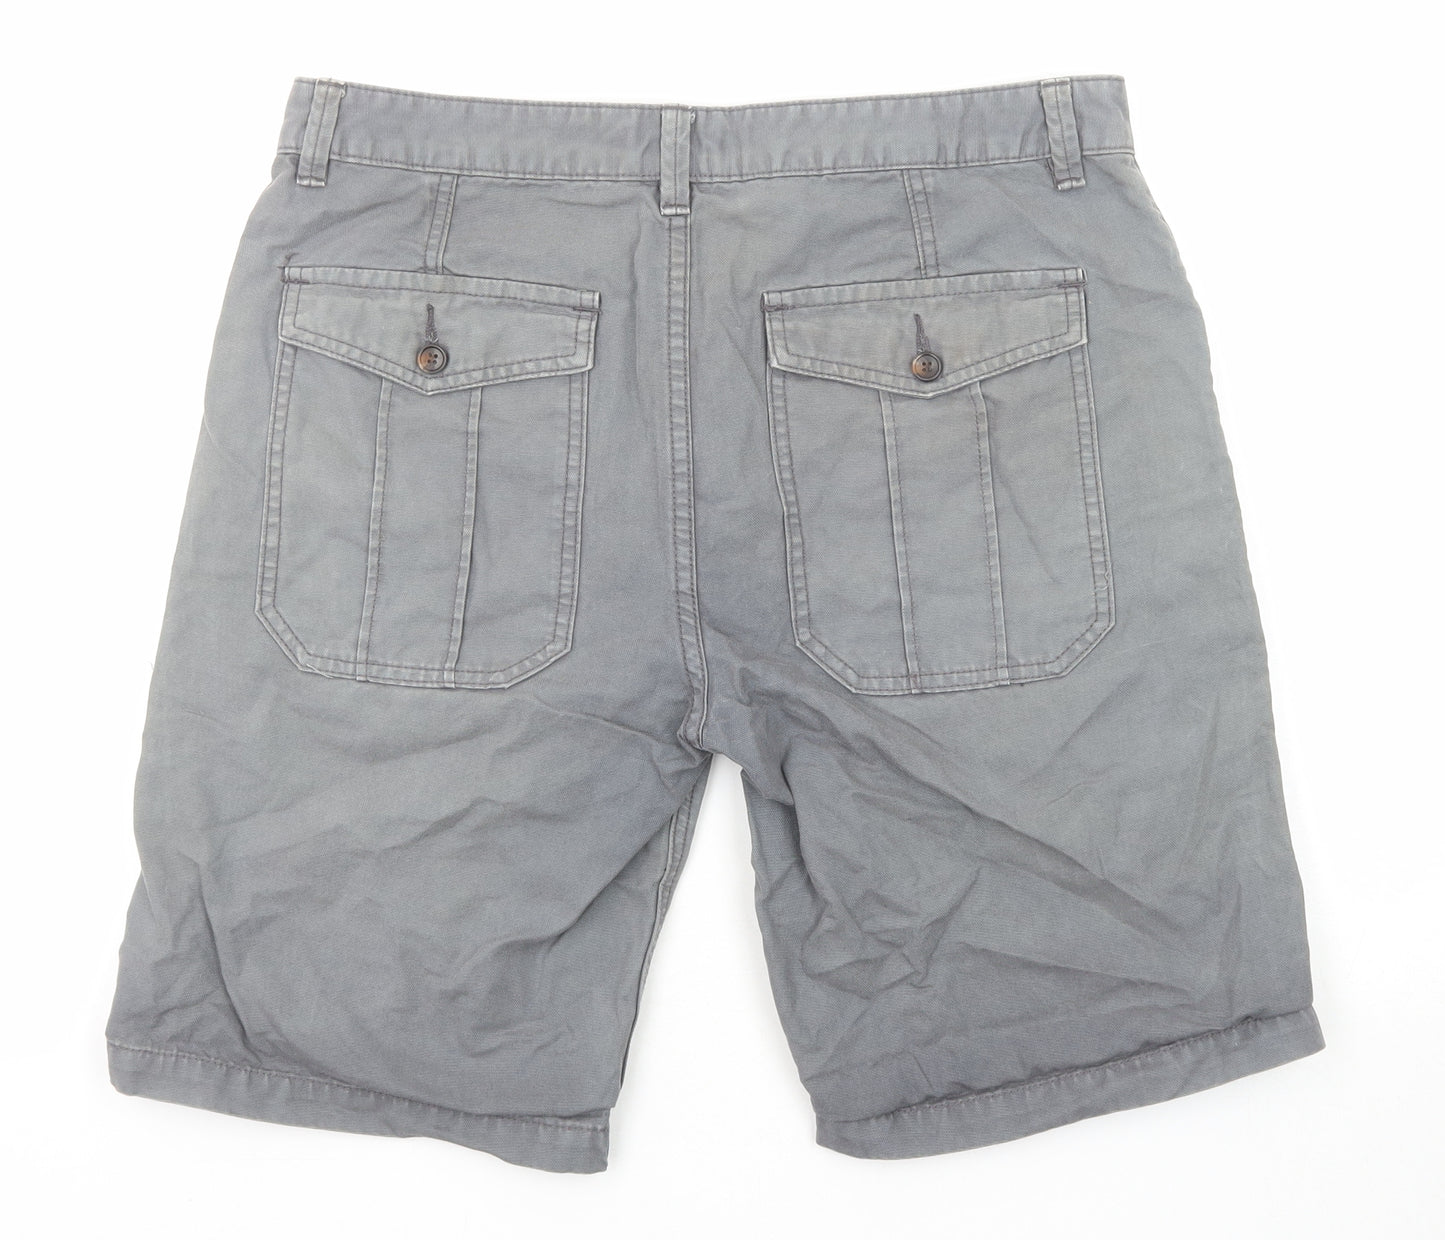 Topman Mens Grey Cotton Chino Shorts Size 34 in Regular Zip